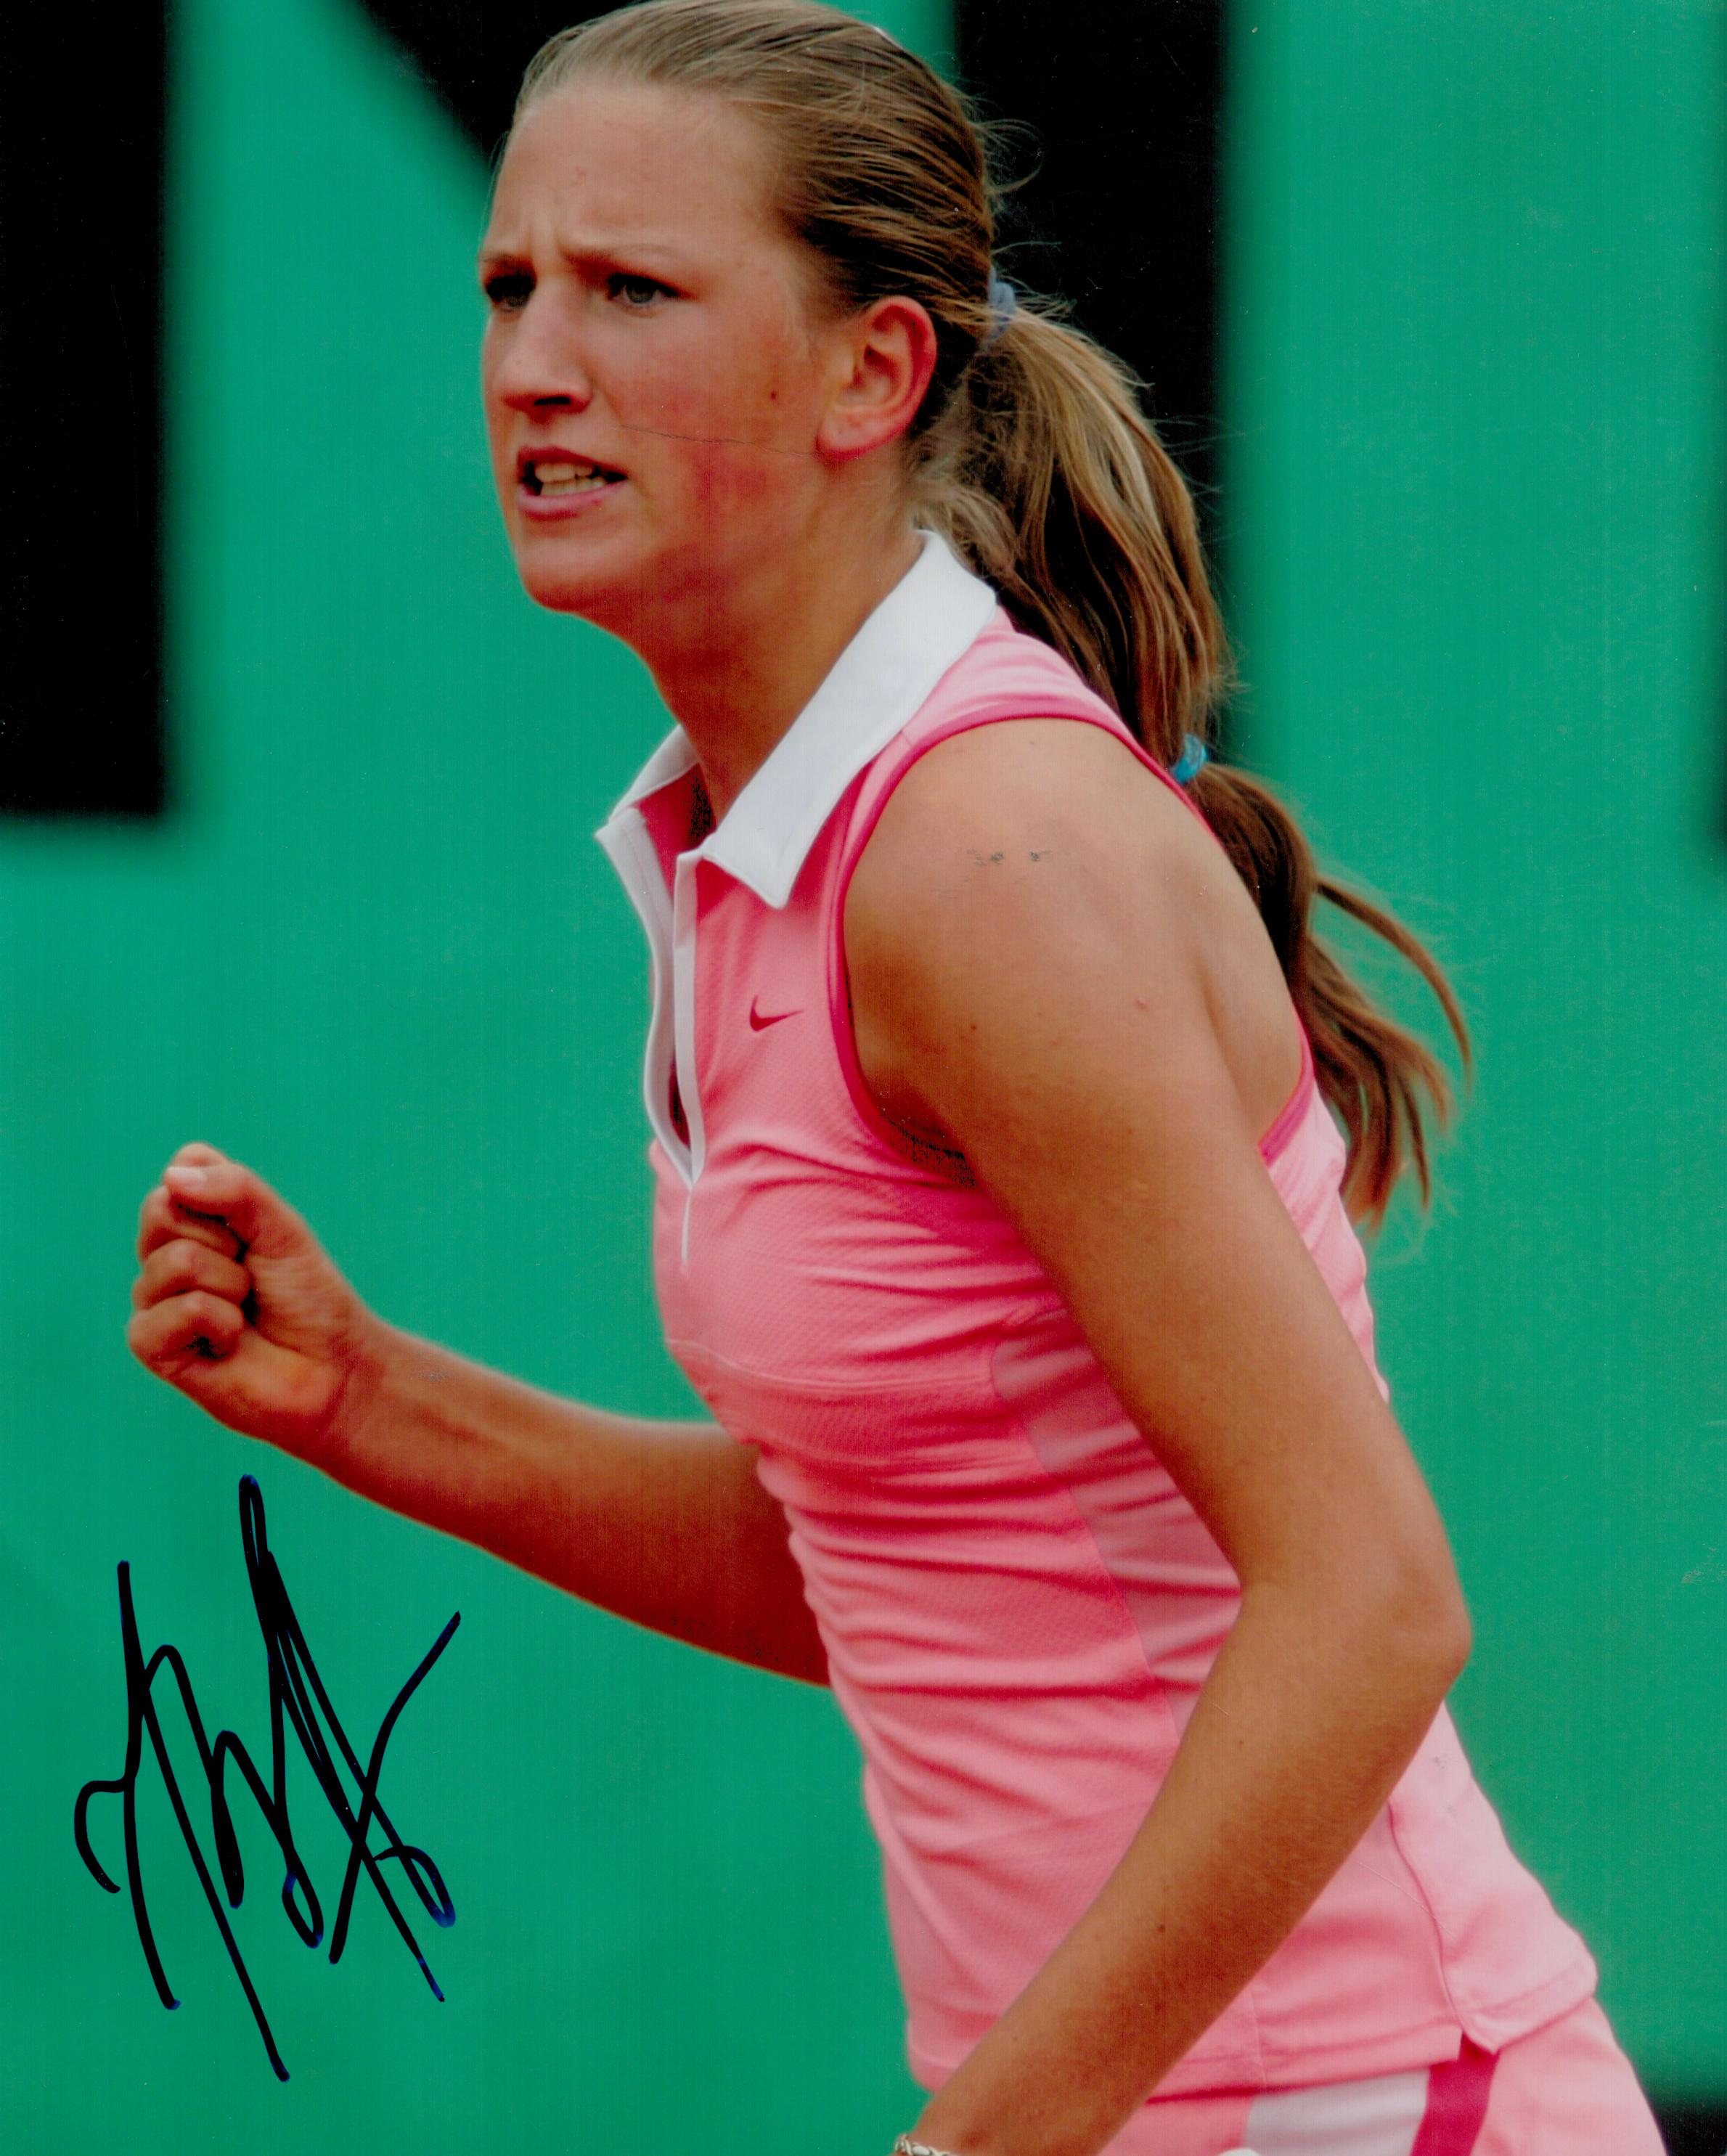 Tennis Victoria Azarenka signed 10x8 colour photo. Good condition. All autographs come with a